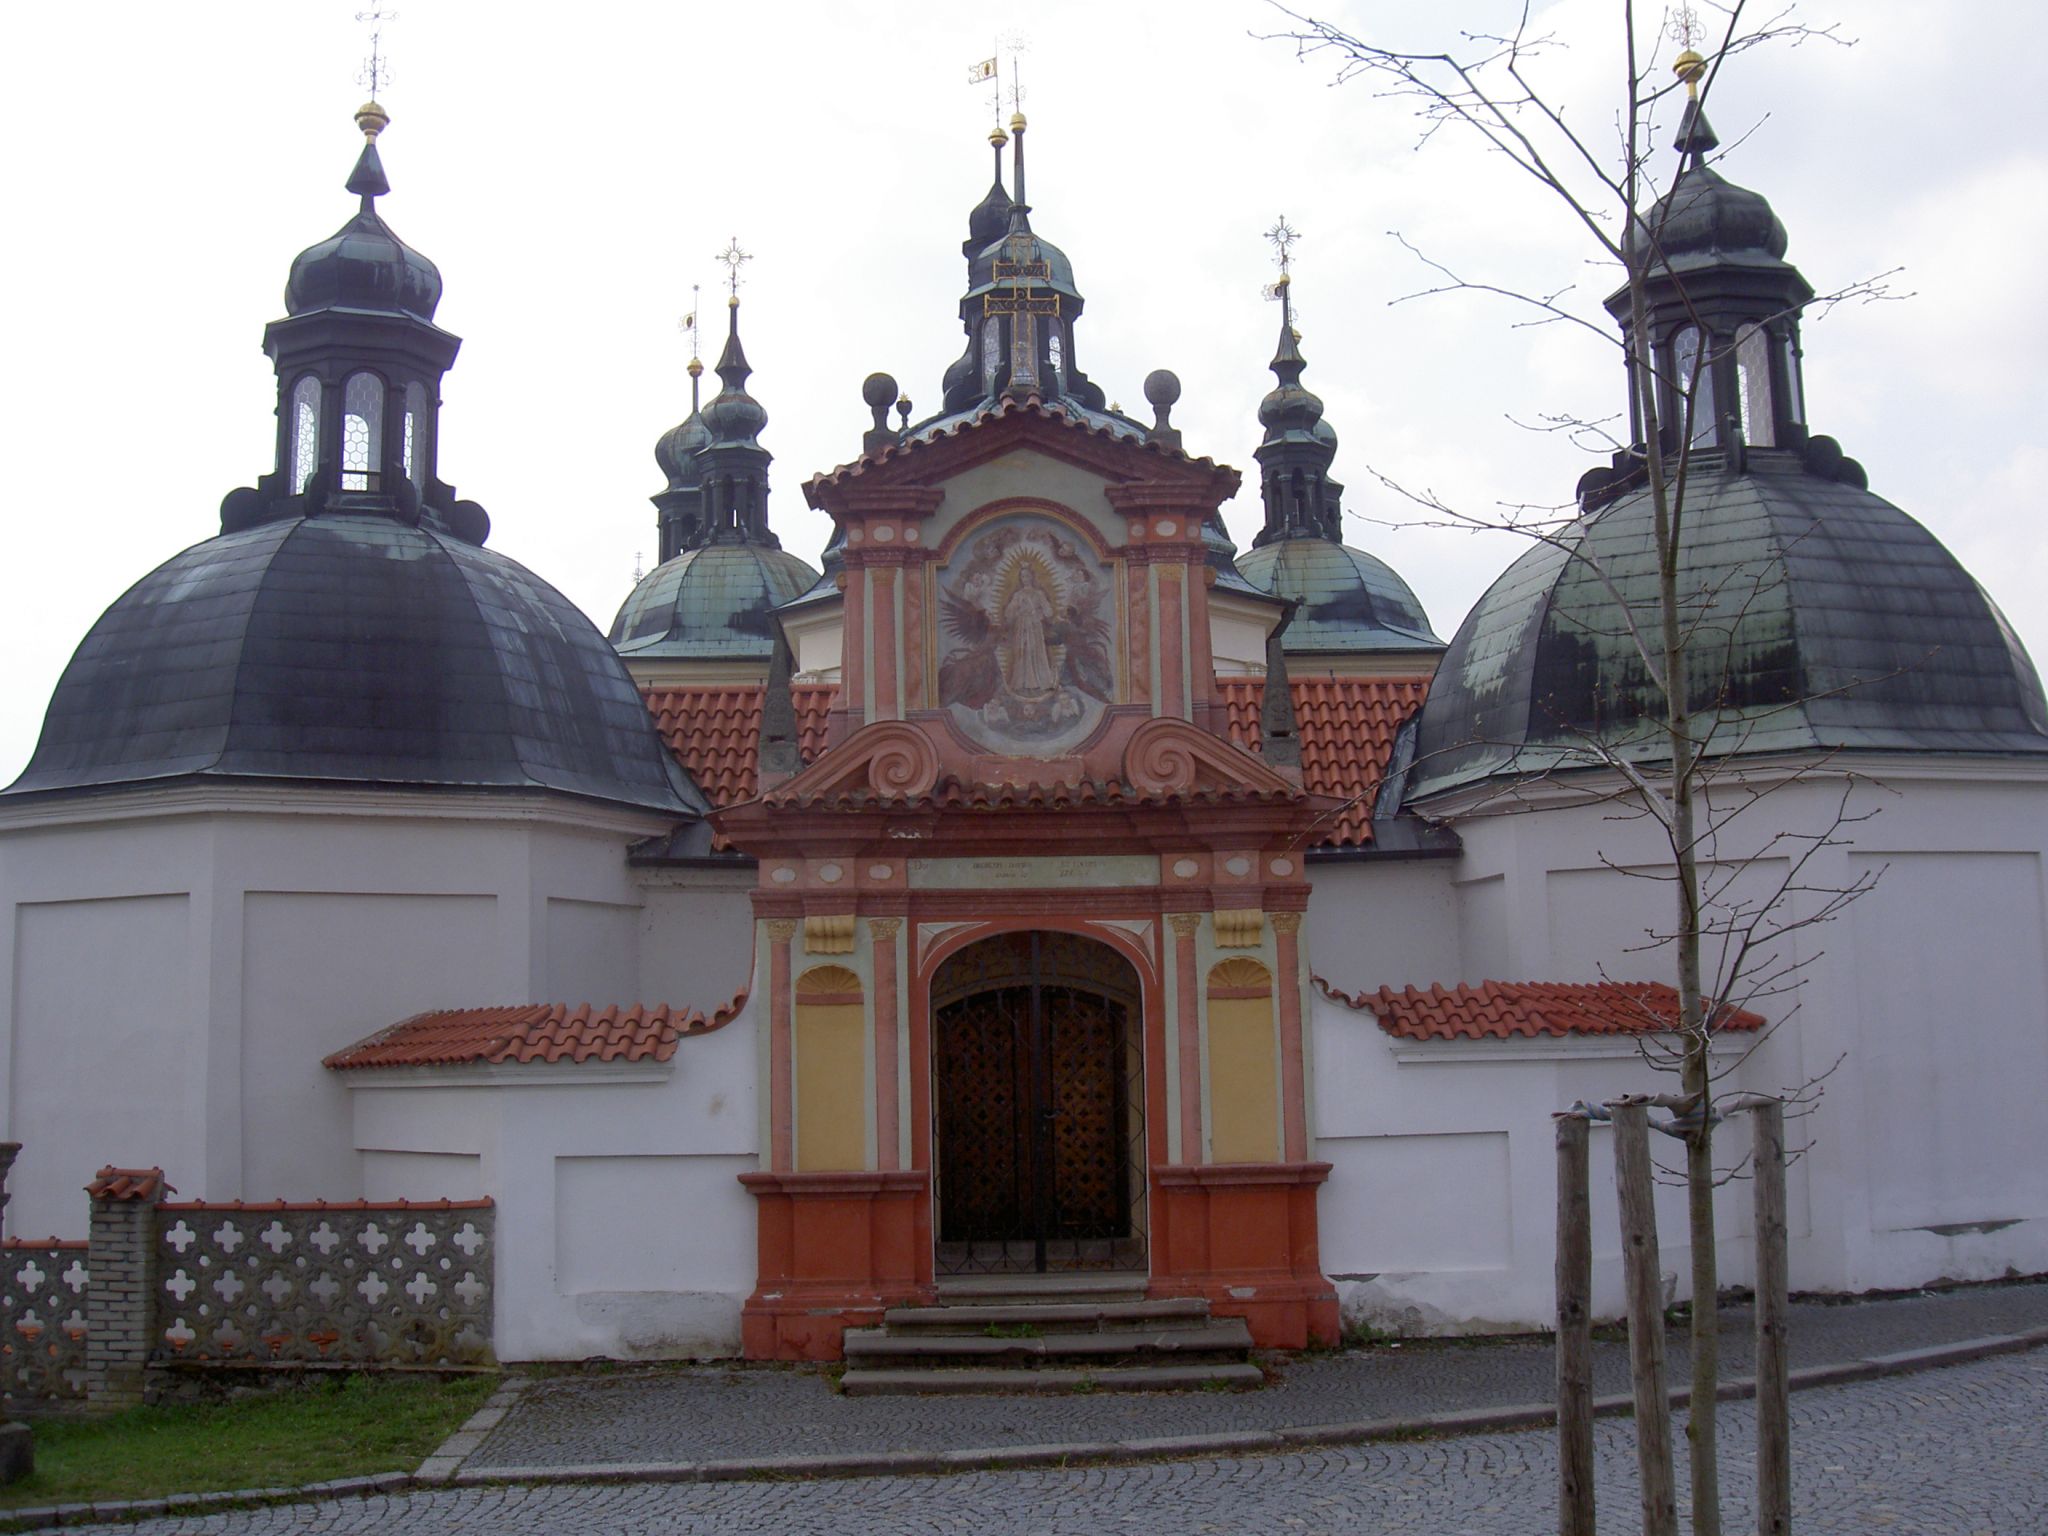 Tabor - Klokoty, prachtig klooster!